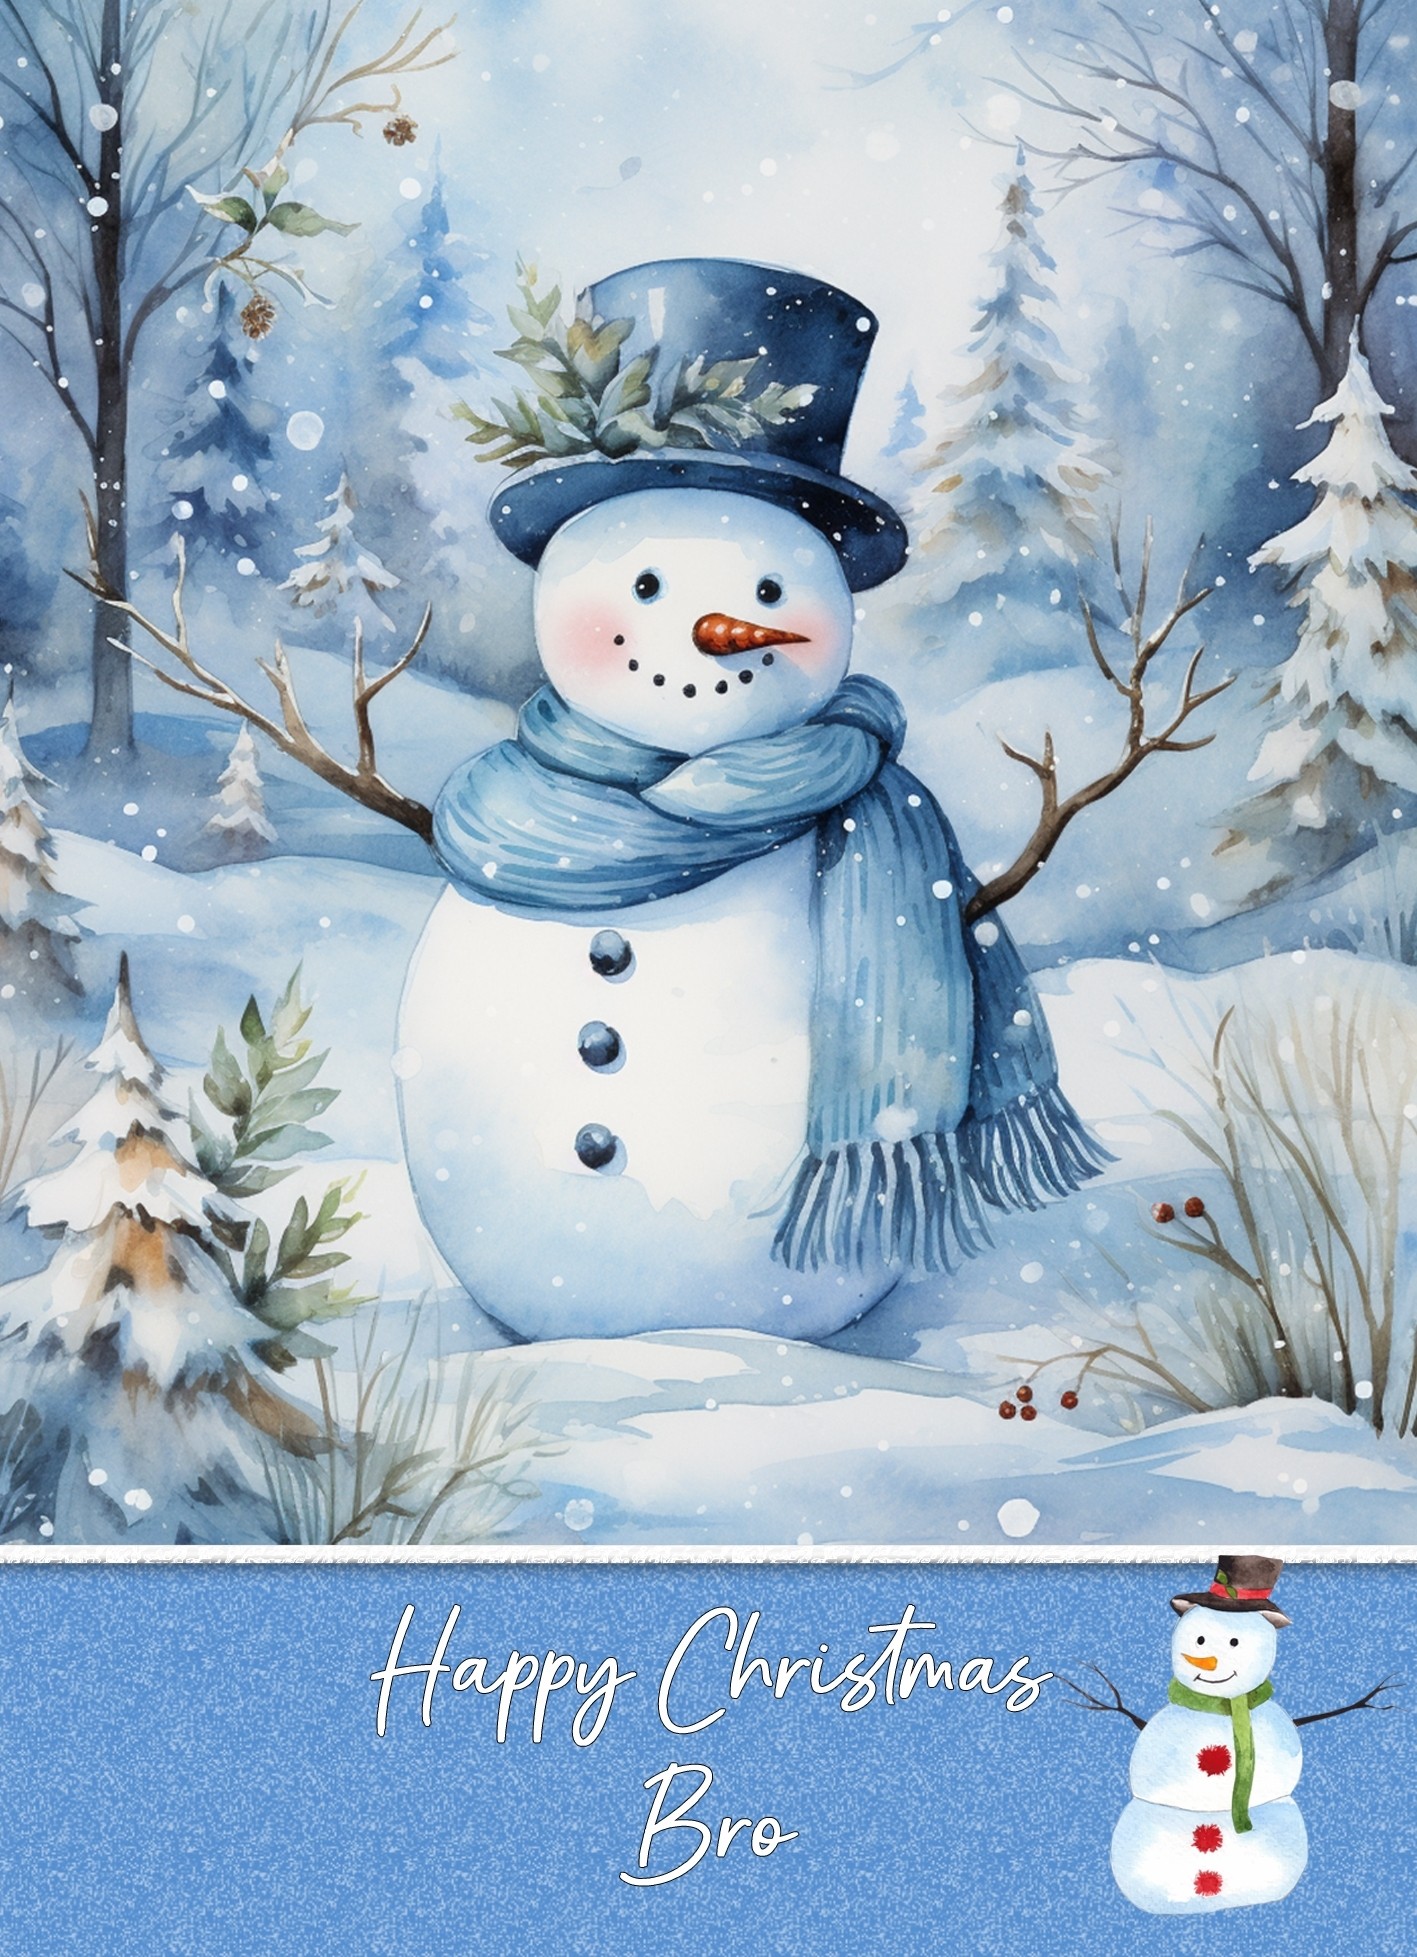 Christmas Card For Bro (Snowman, Design 8)